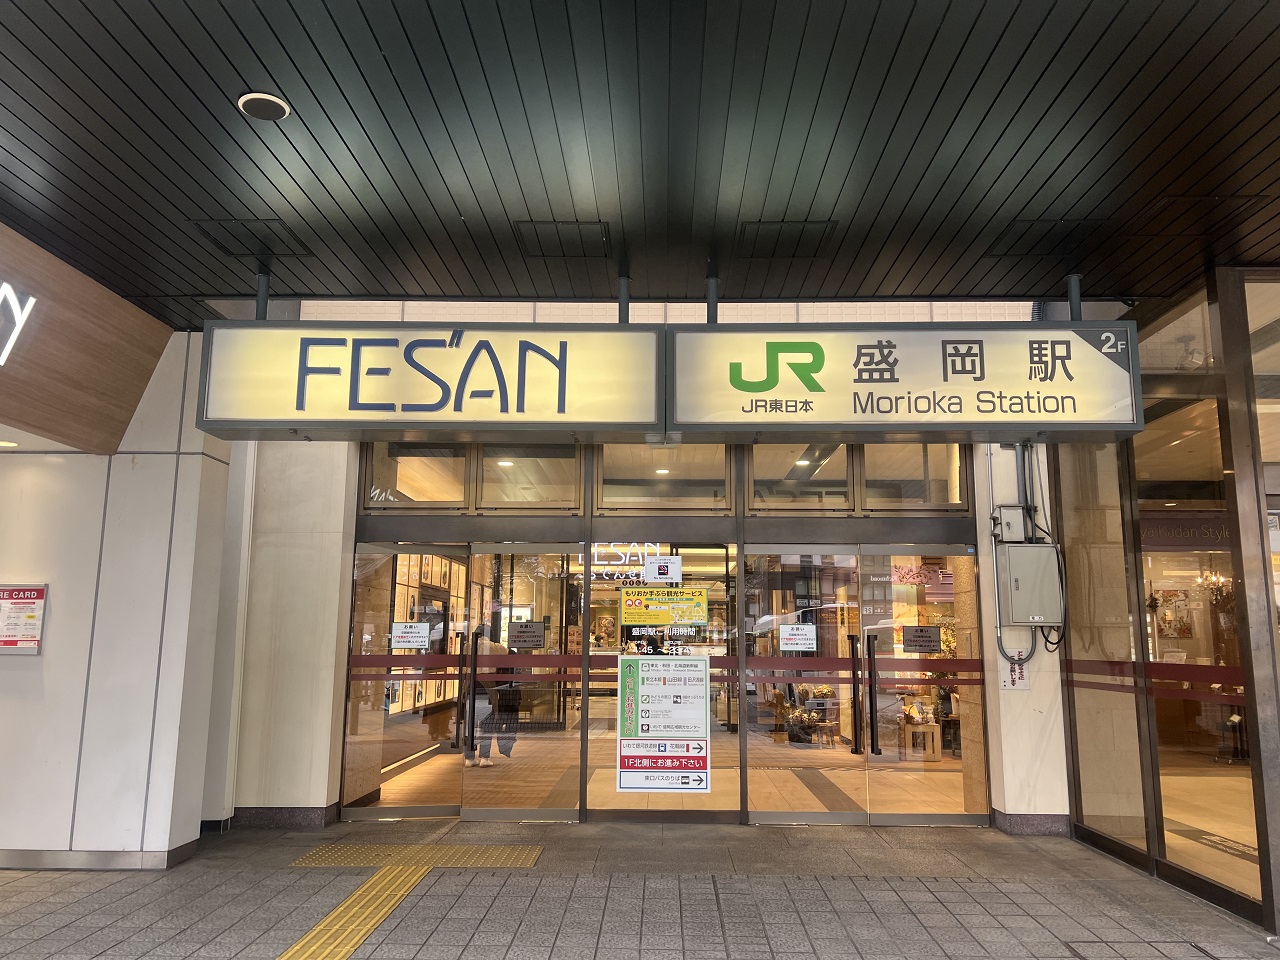 Fesan ห้างสรรพสินค้า สถานีรถไฟ โมริโอกะ โทโฮคุ 